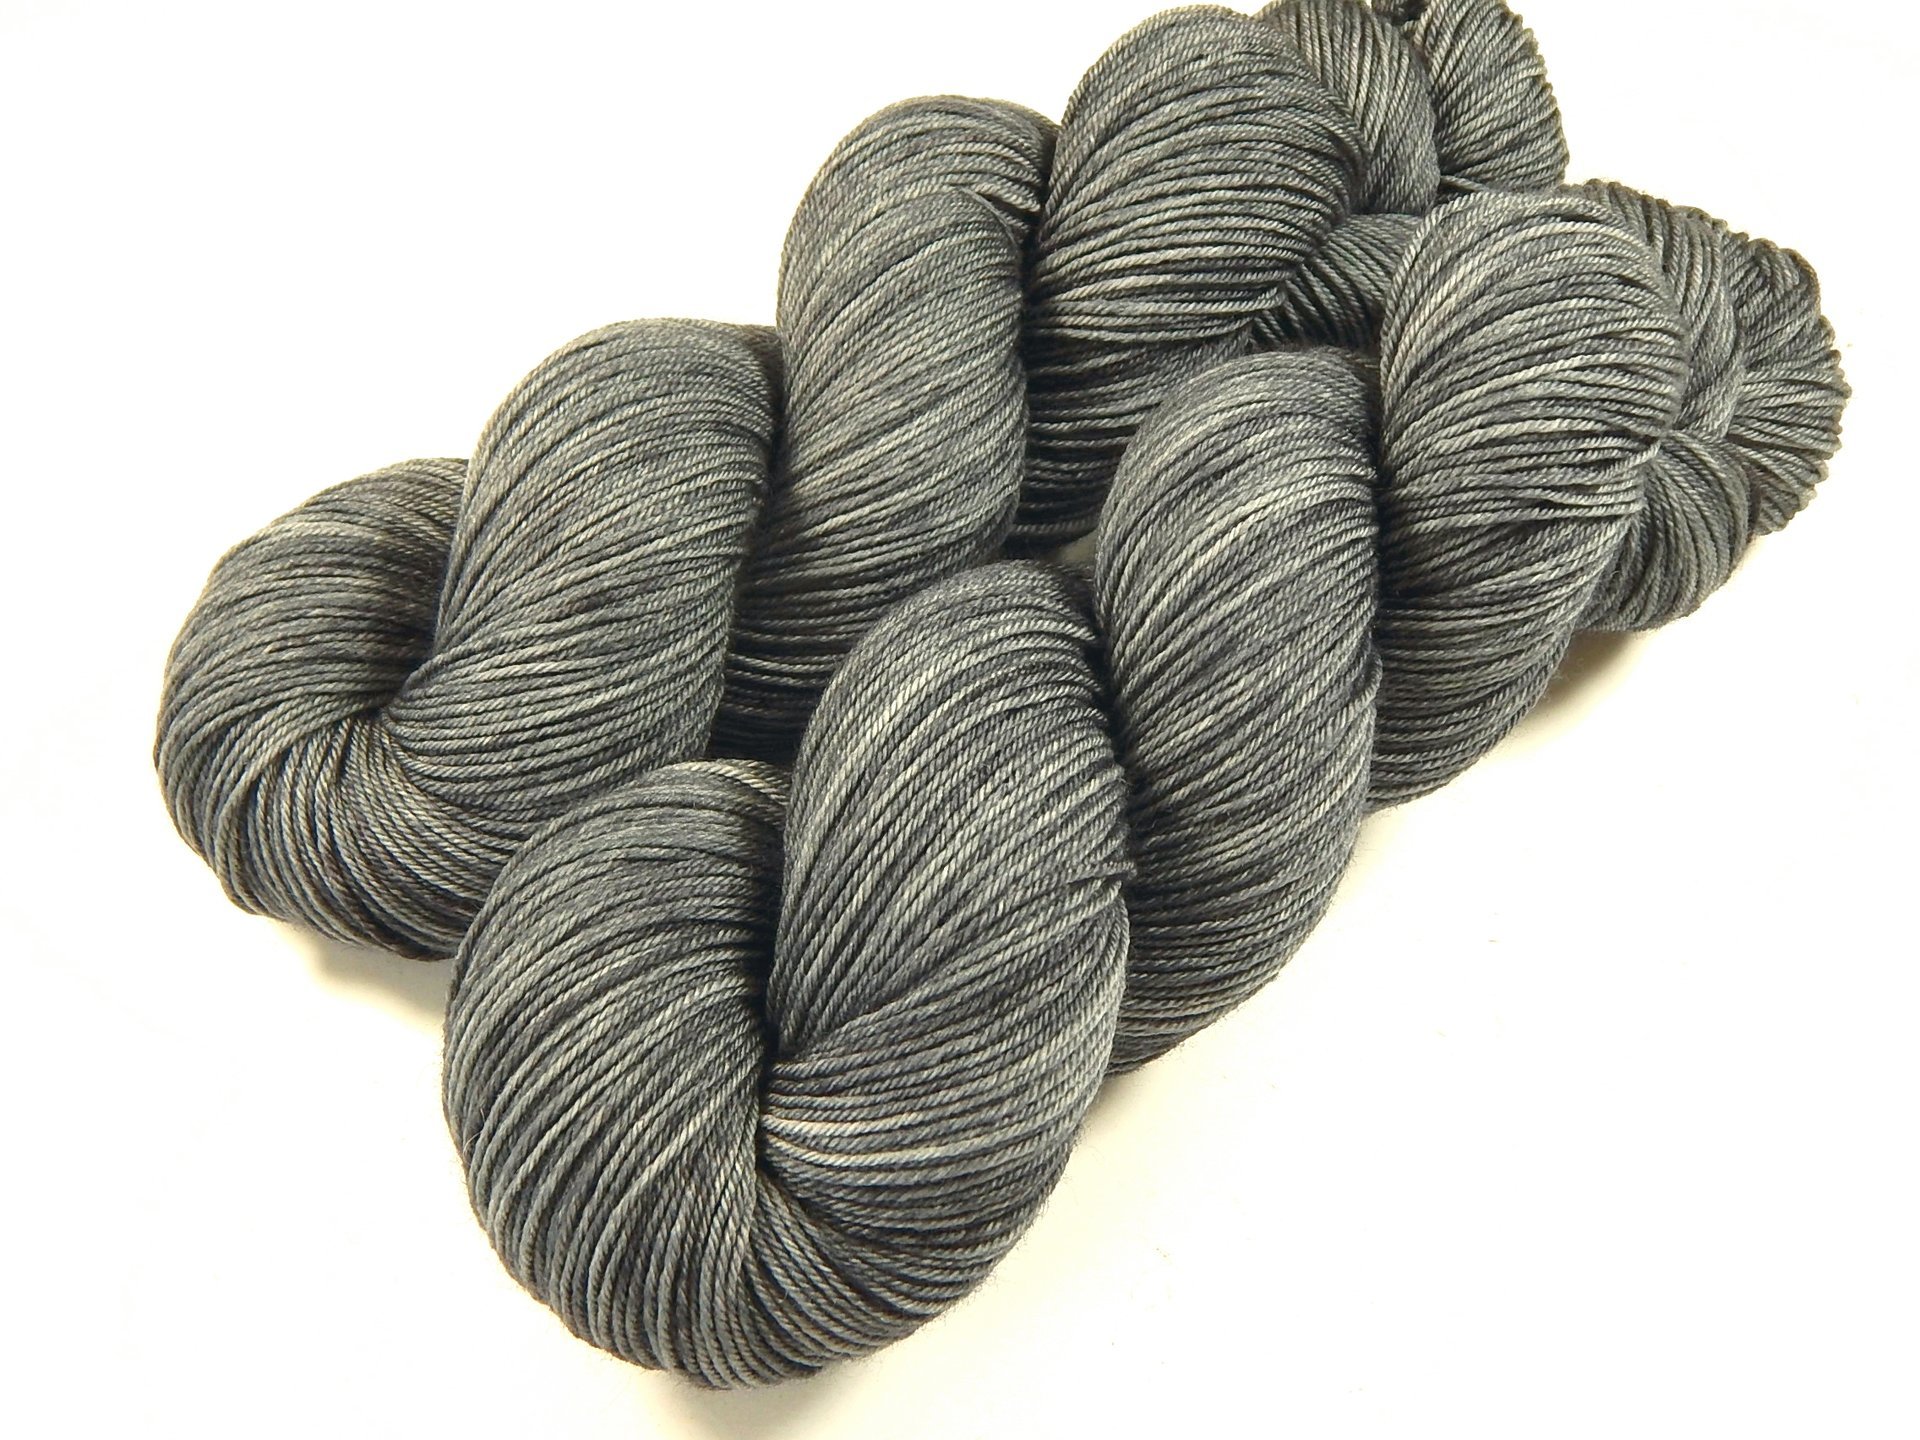 Hand Dyed Sock Yarn, Fingering Weight 4 Ply 100% Superwash Merino Wool - Pewter - Indie Dyed Knitting Yarn, Neutral Tonal Medium Grey Gray 